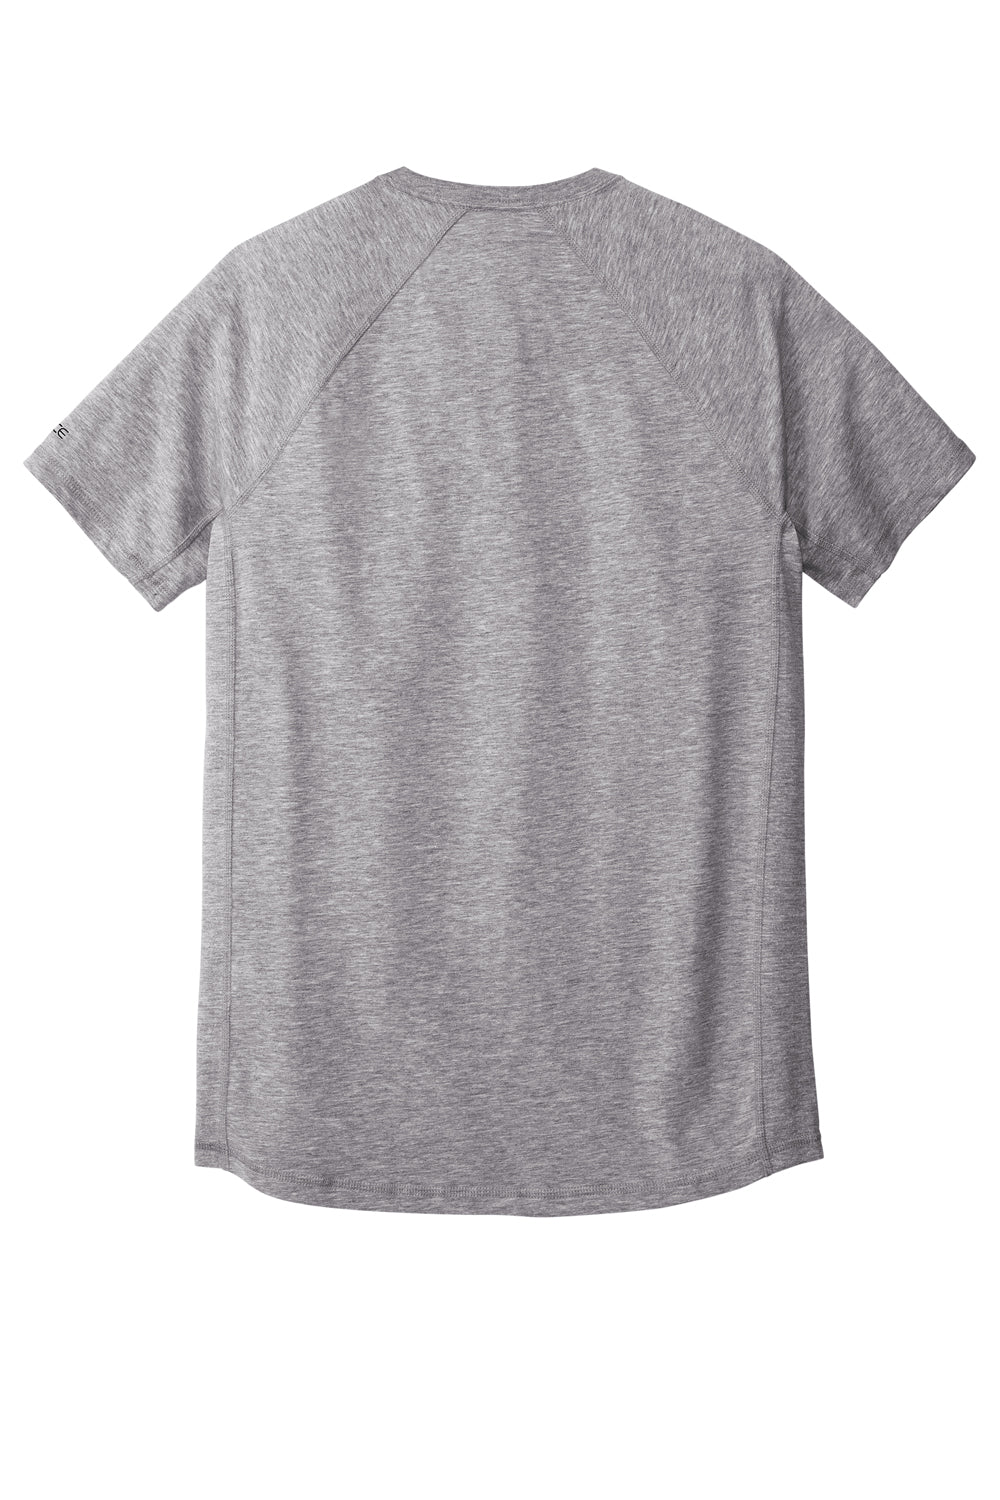 Carhartt CT104616 Mens Force Moisture Wicking Short Sleeve Crewneck T-Shirt w/ Pocket Heather Grey Flat Back